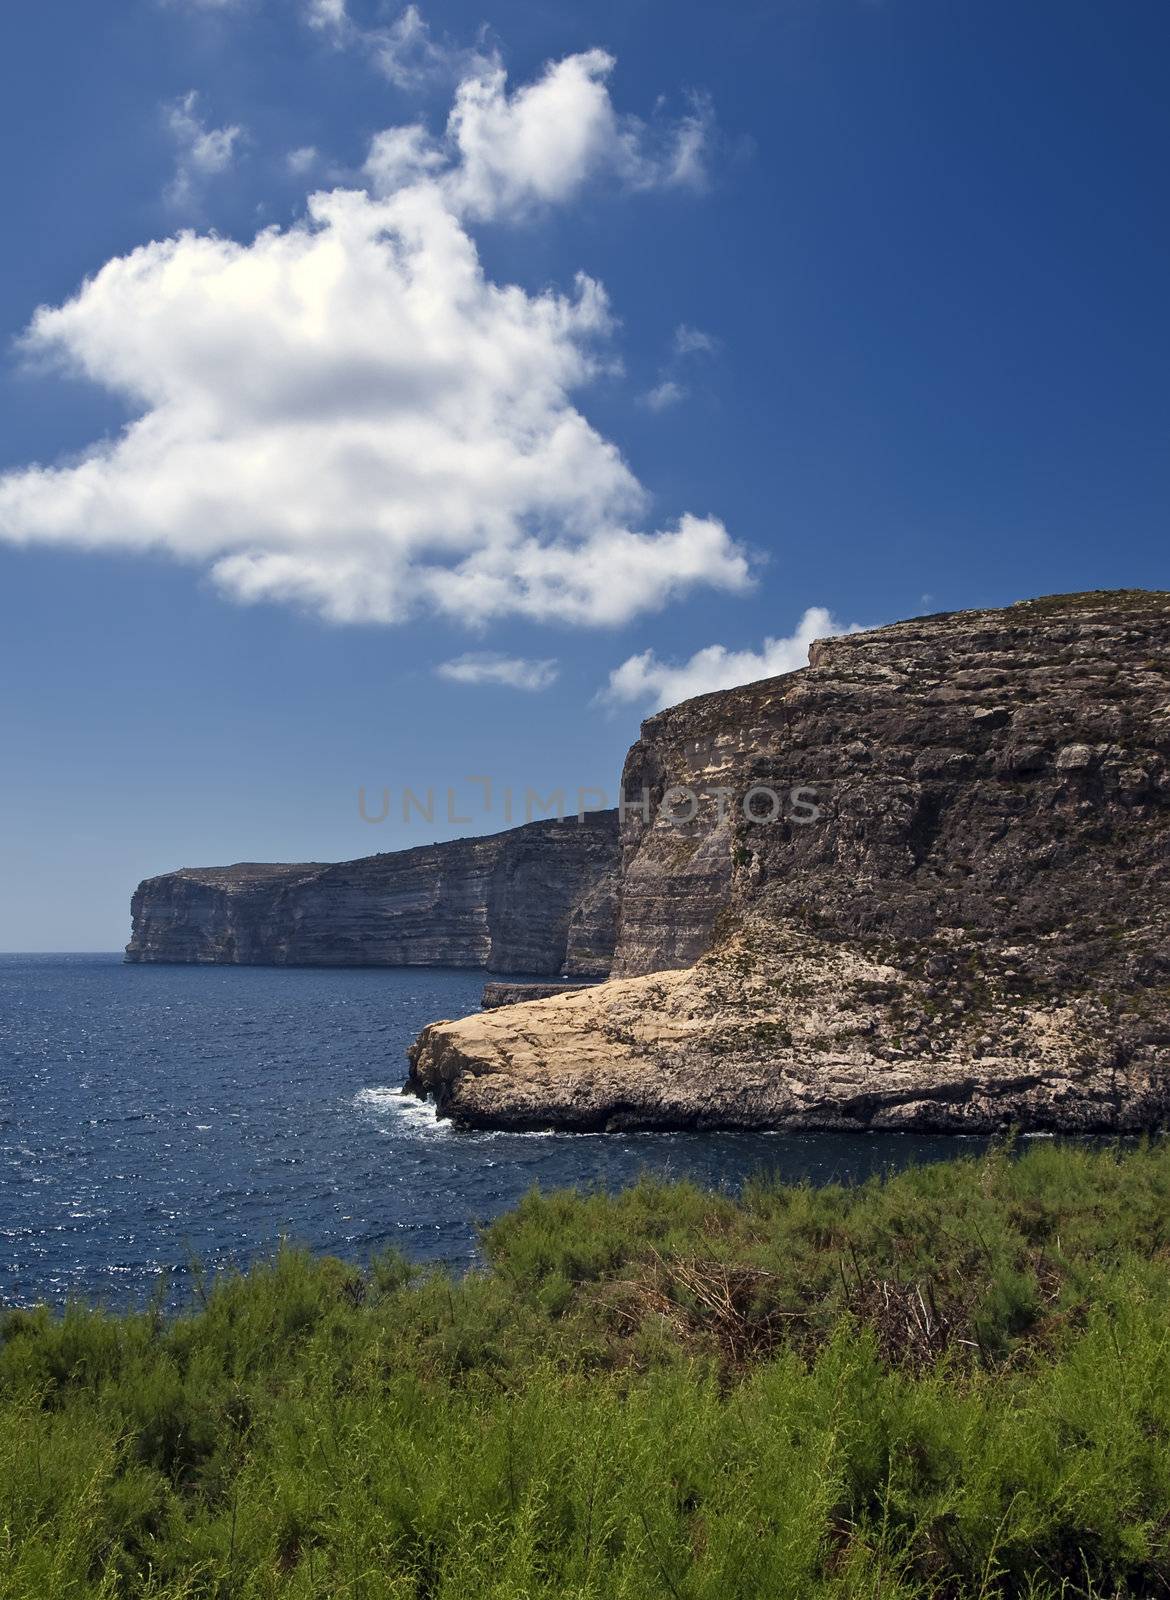 The beautiful limestone cliffs in Xlendi on the island of Gozo